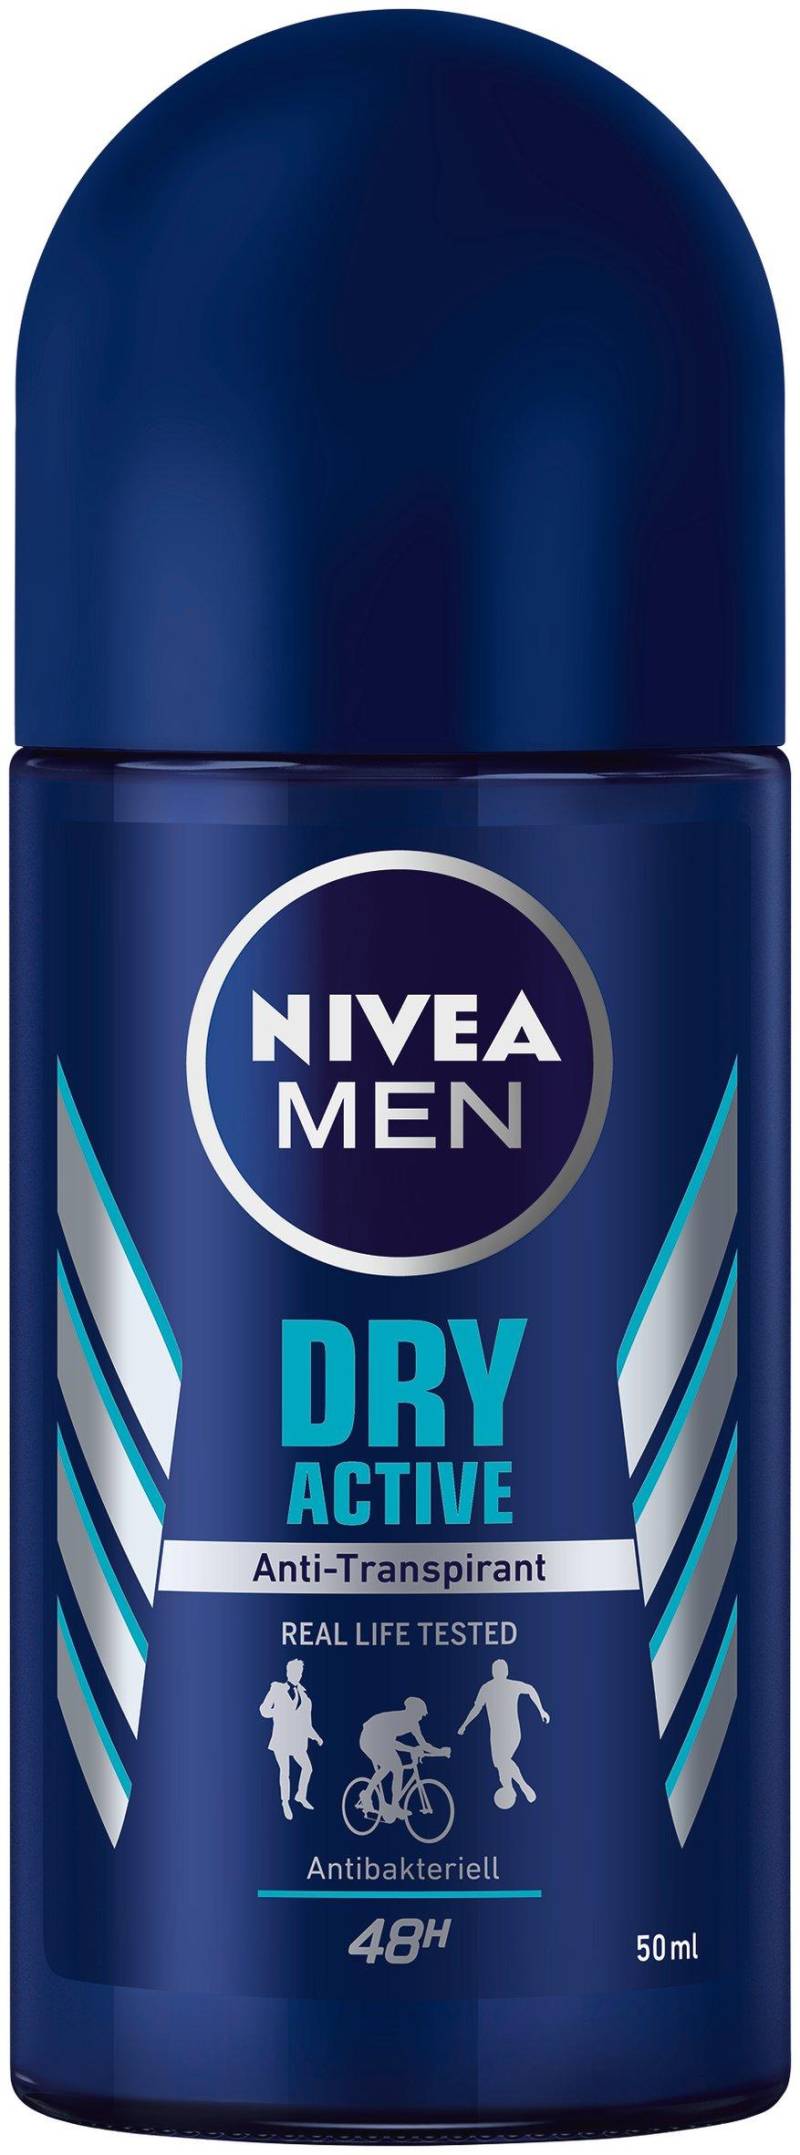 Deo Dry Active Roll-on Male Unisex  50ml von NIVEA